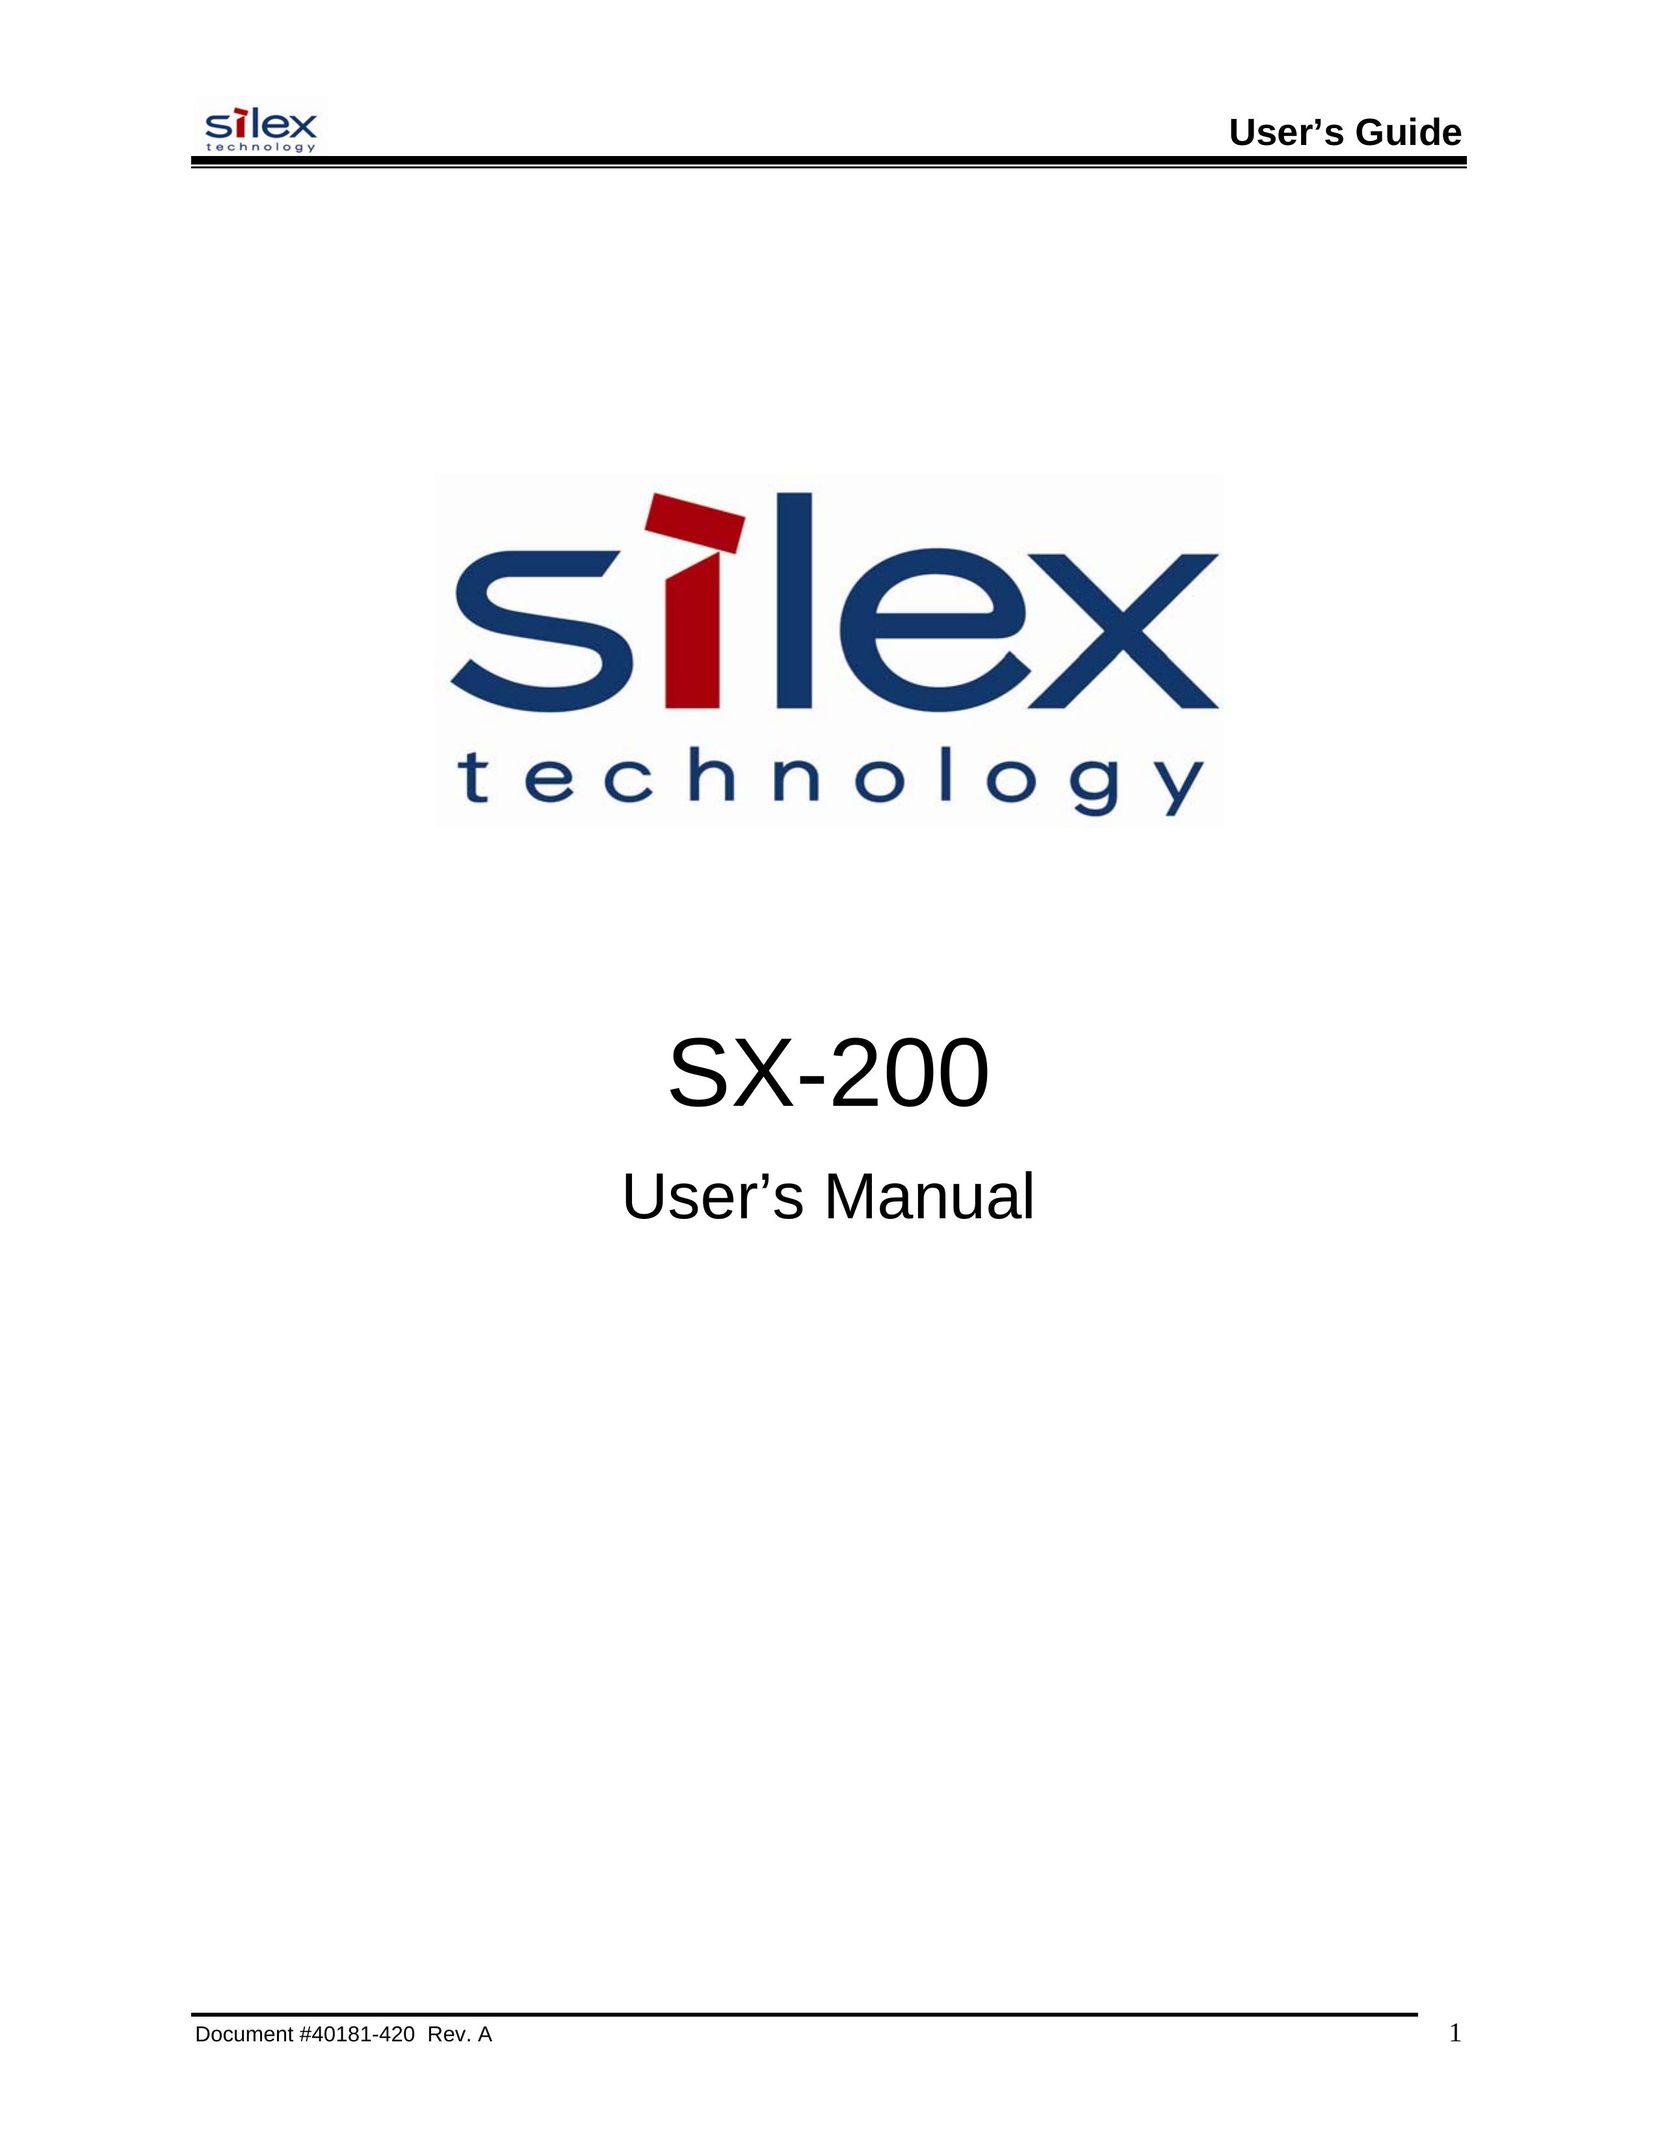 Silex technology SX-200 Printer User Manual